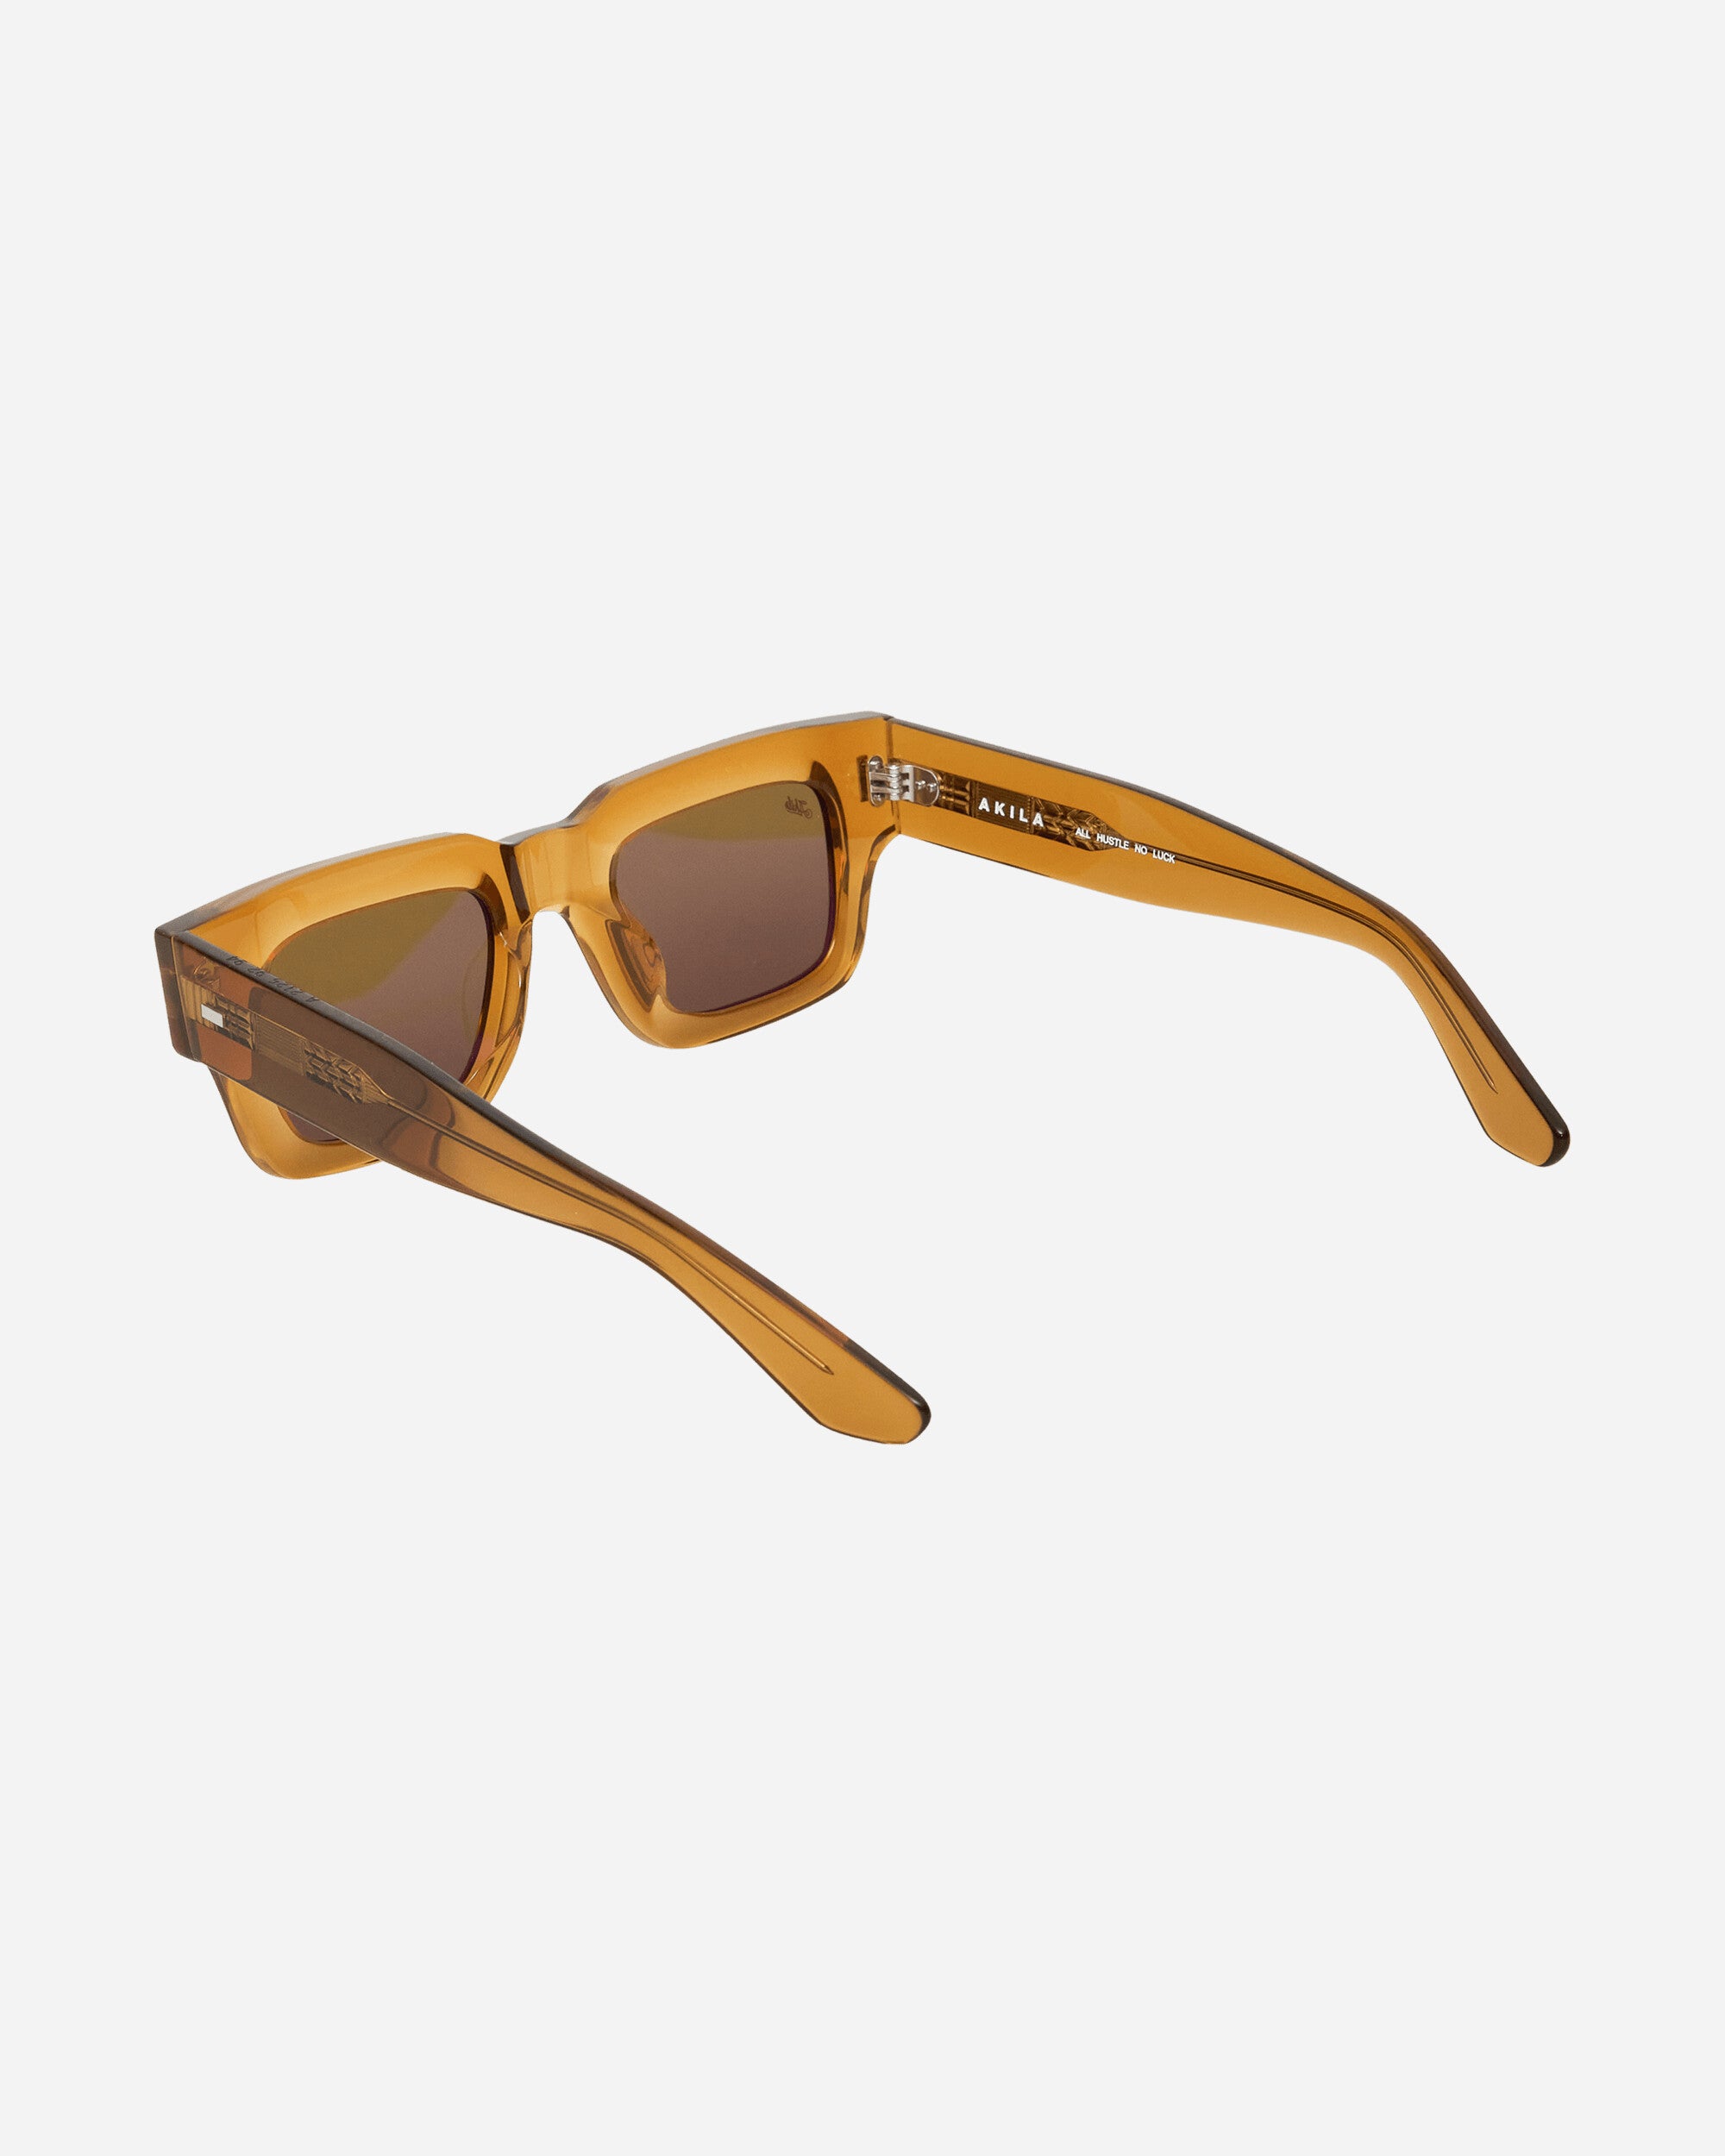 AKILA Ares Brown/Brown Eyewear Sunglasses 212592 94